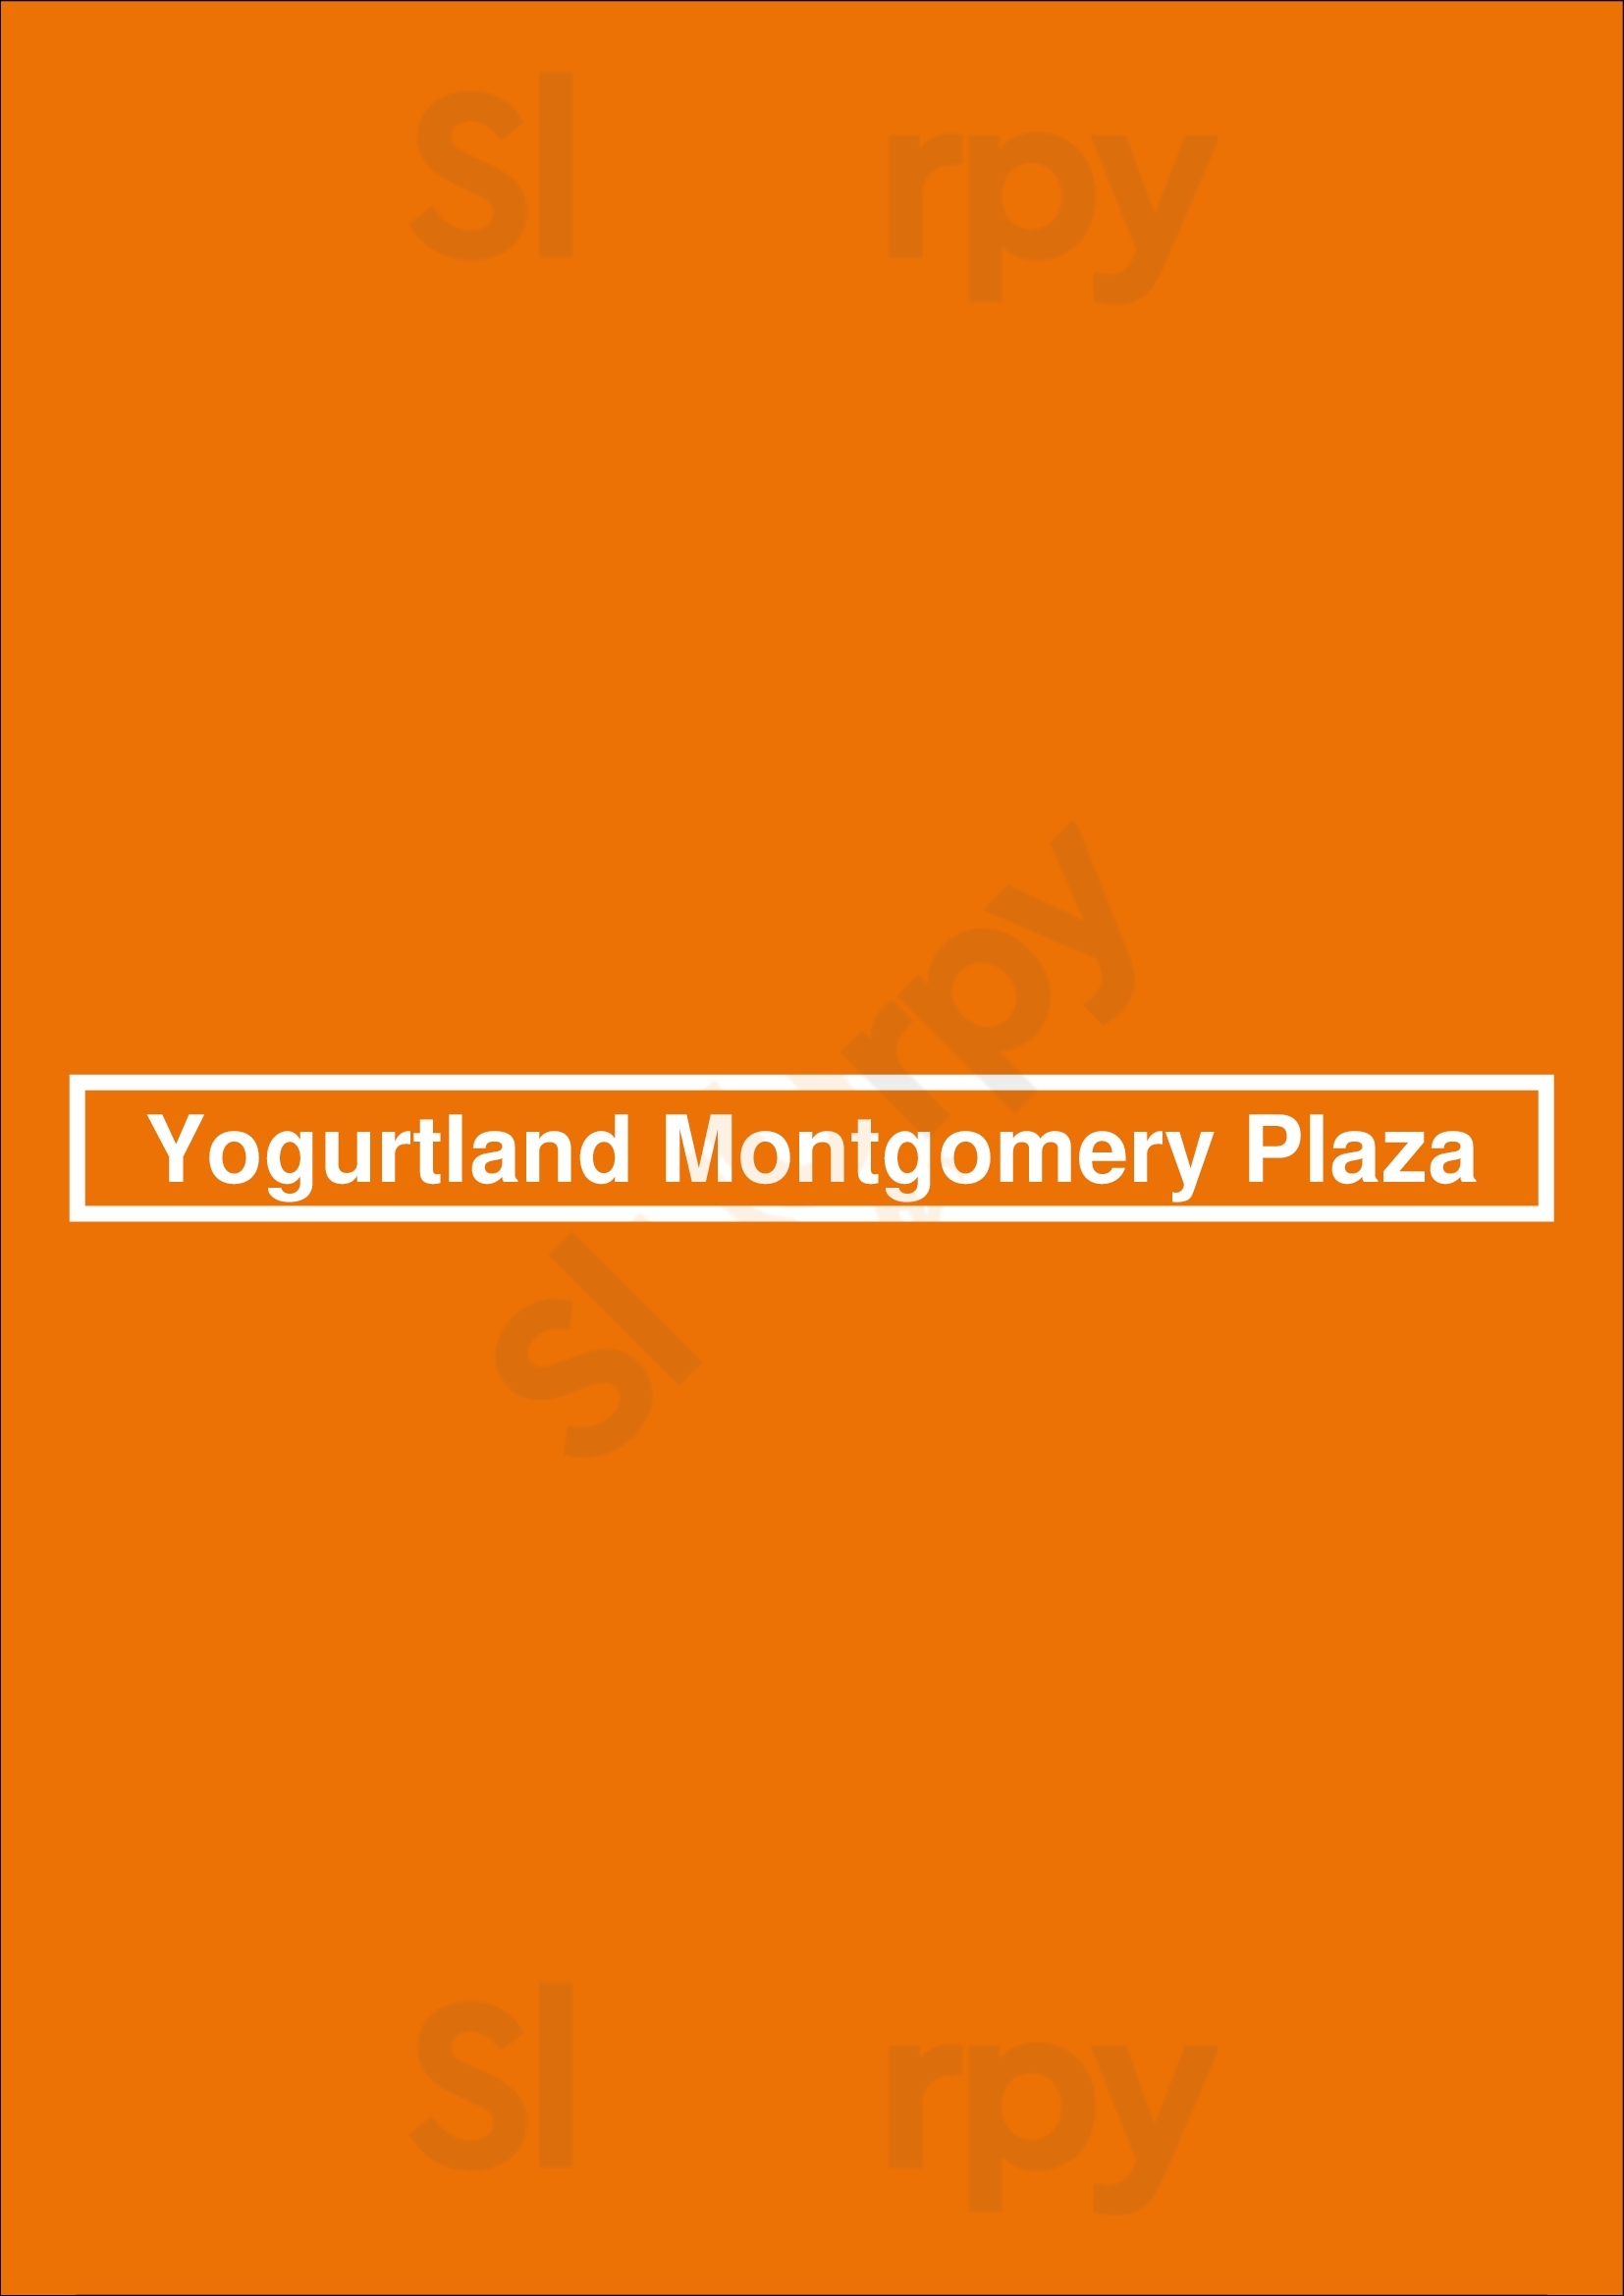 Yogurtland Montgomery Plaza Fort Worth Menu - 1